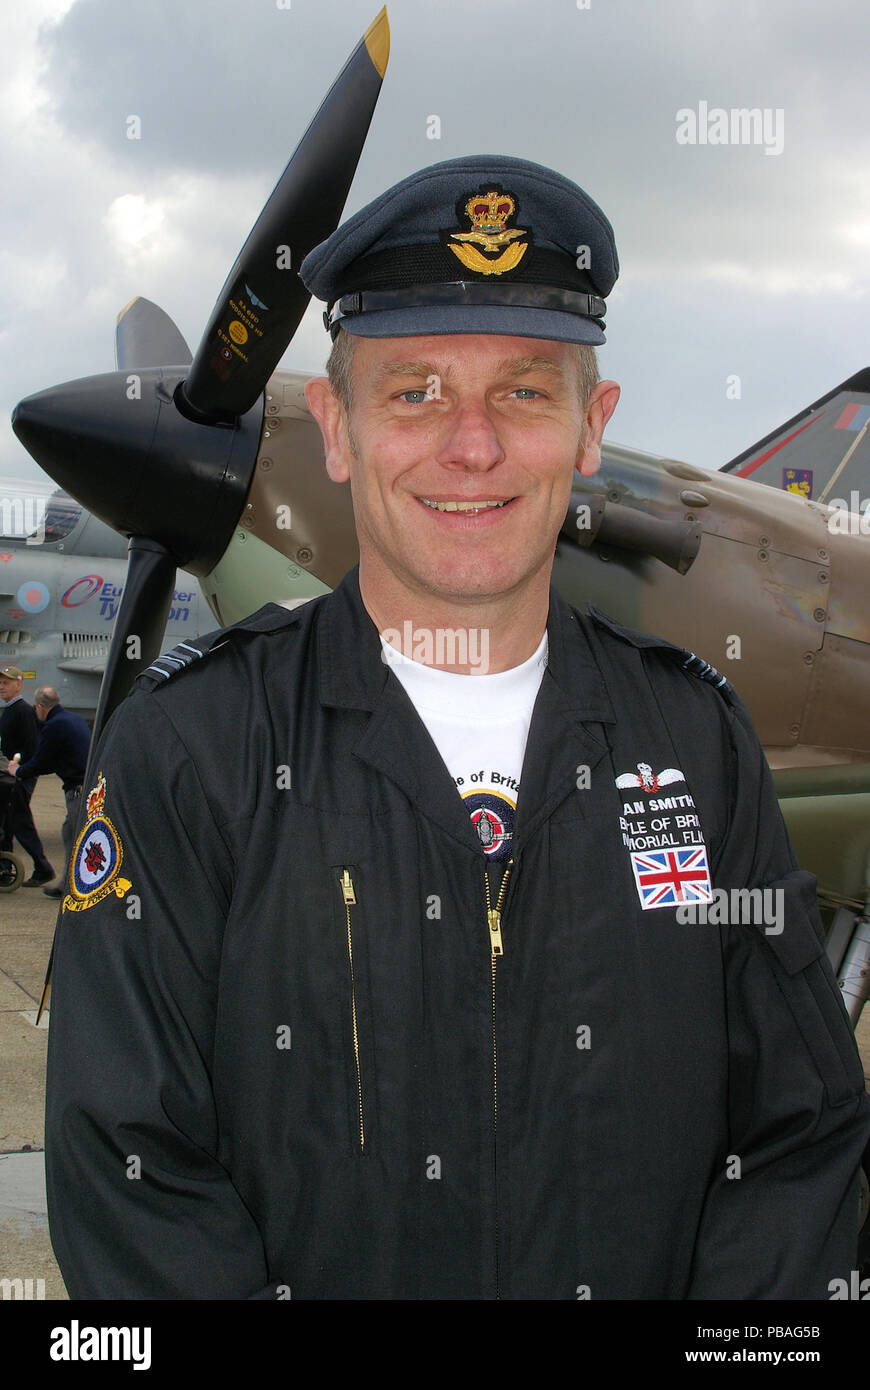 Offizier der Royal Air Force, RAF Battle of Britain Memorial Flight Pilot Sqn LDR Ian Smith in Uniform Stockfoto